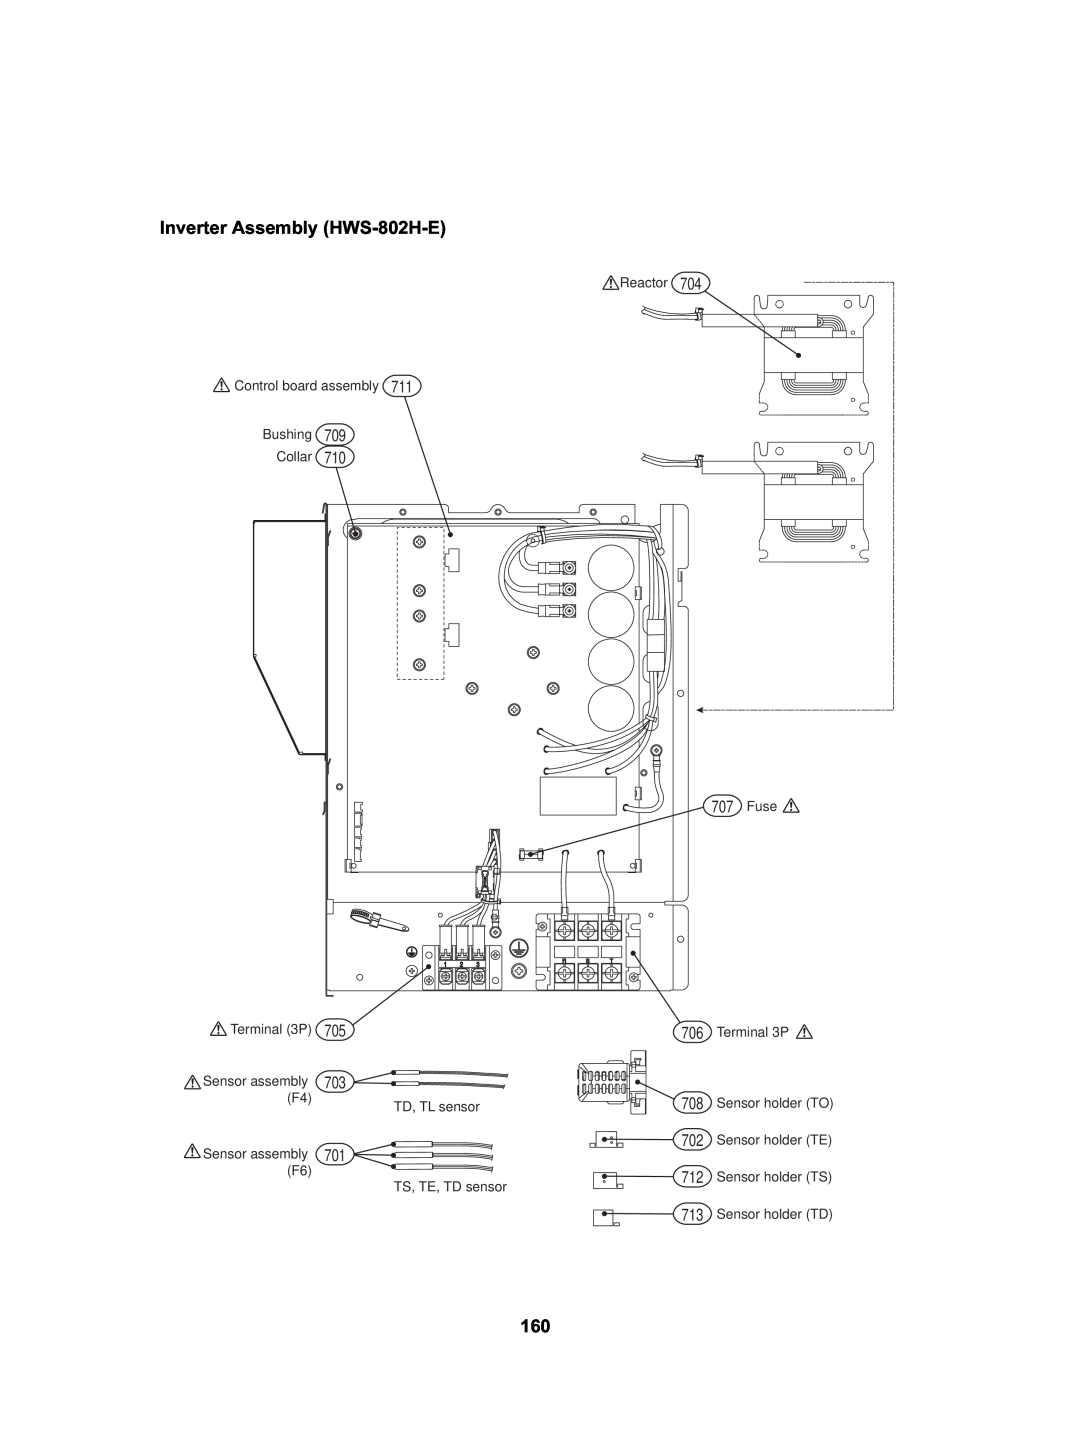 Toshiba Inverter Assembly HWS-802H-E, Reactor Control board assembly Bushing Collar, Fuse, Terminal 3P, TD, TL sensor 